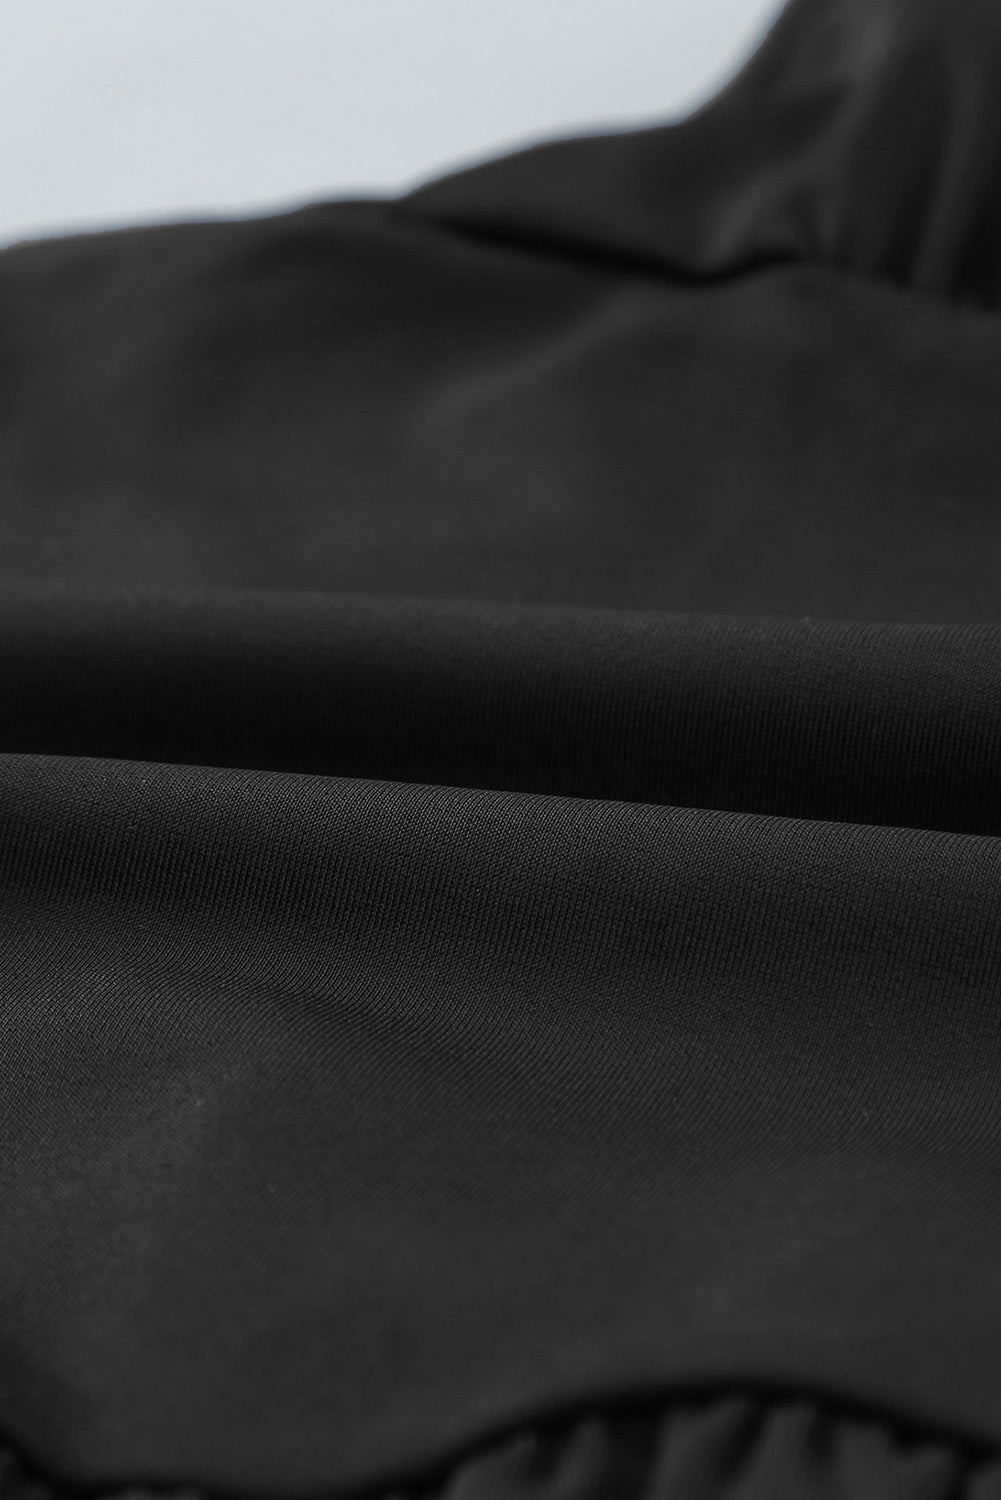 Black Strappy Neck Detail High Waist Swimsuit